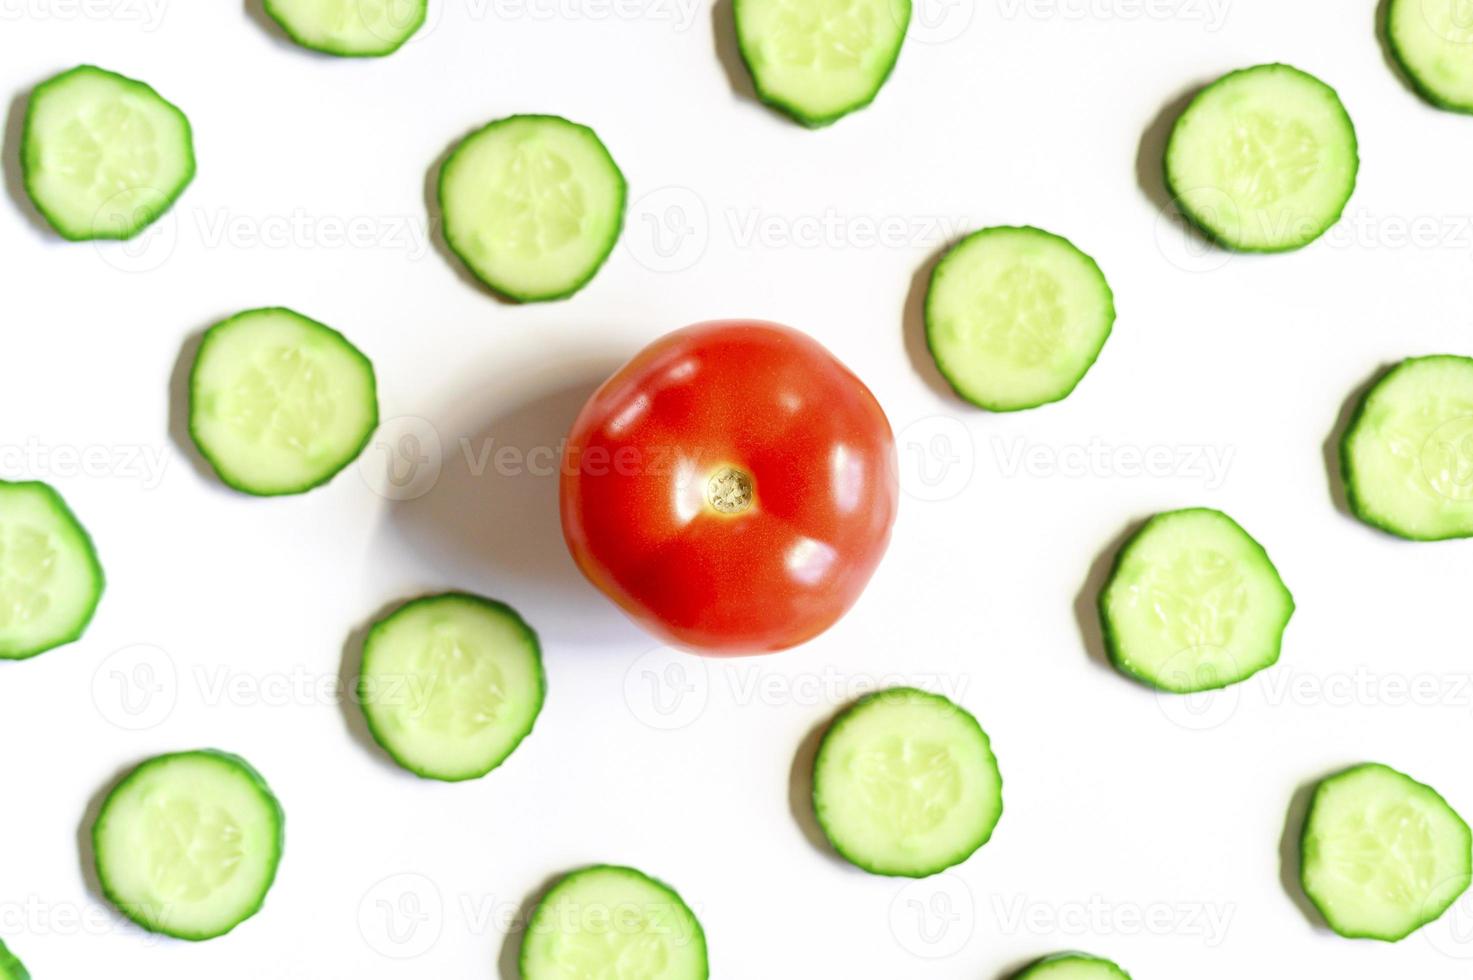 herhalend patroon van gesneden halve cirkels van verse rauwe groentekomkommers voor salade en tomaat foto